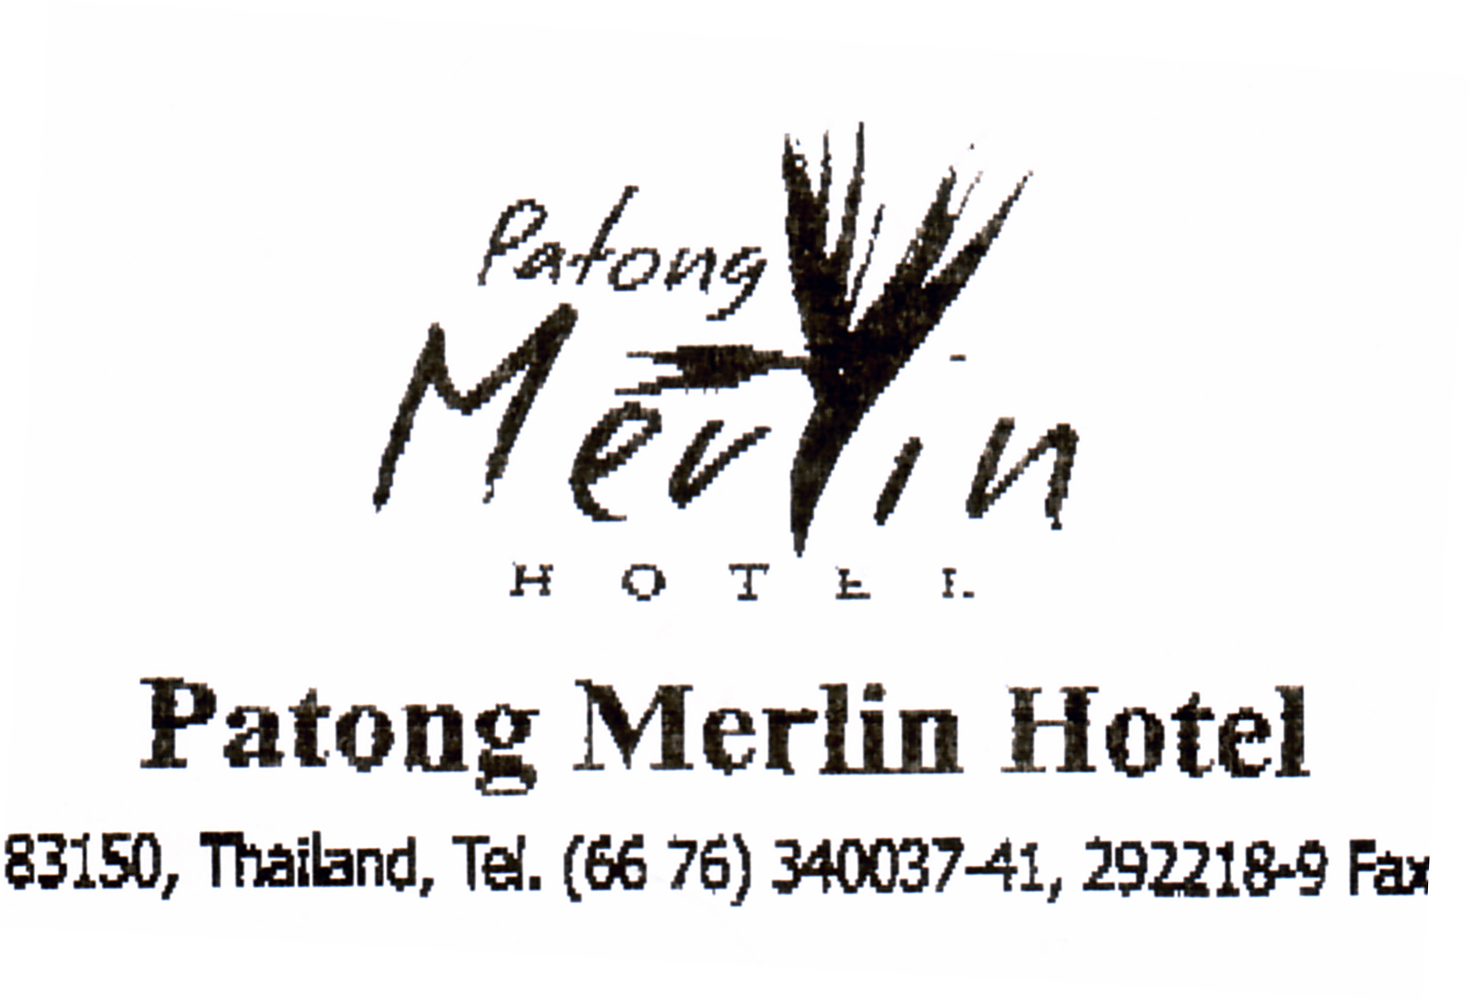 Patong Merlin Hotel